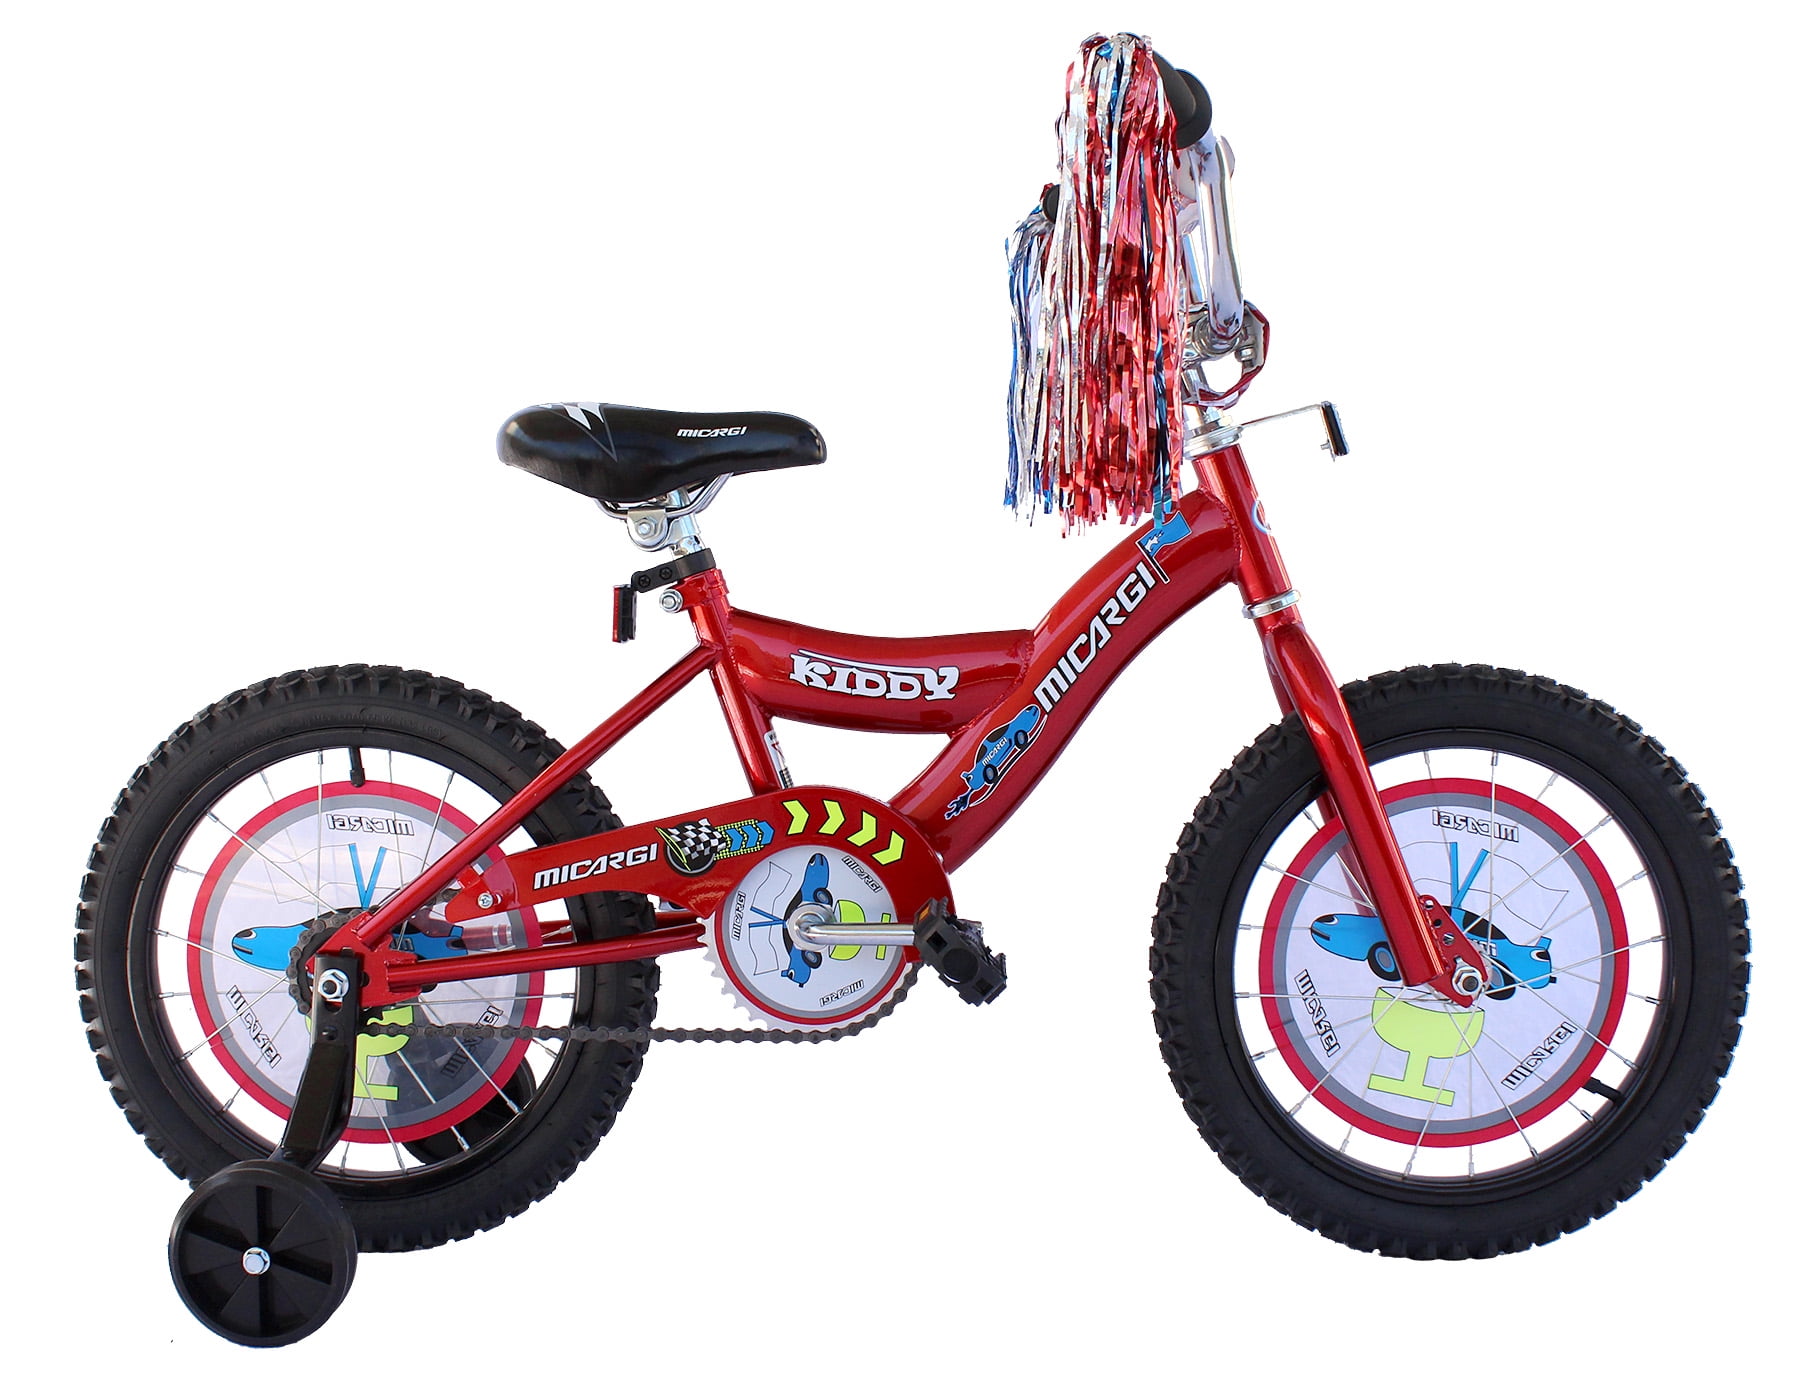 Wonder Wheels 16 In. Boy's and Girl's BMX S-Type Frame Bicycle Coaster Brake One Piece Crank Chrome Rims Black Tire Kid's Bike - Red